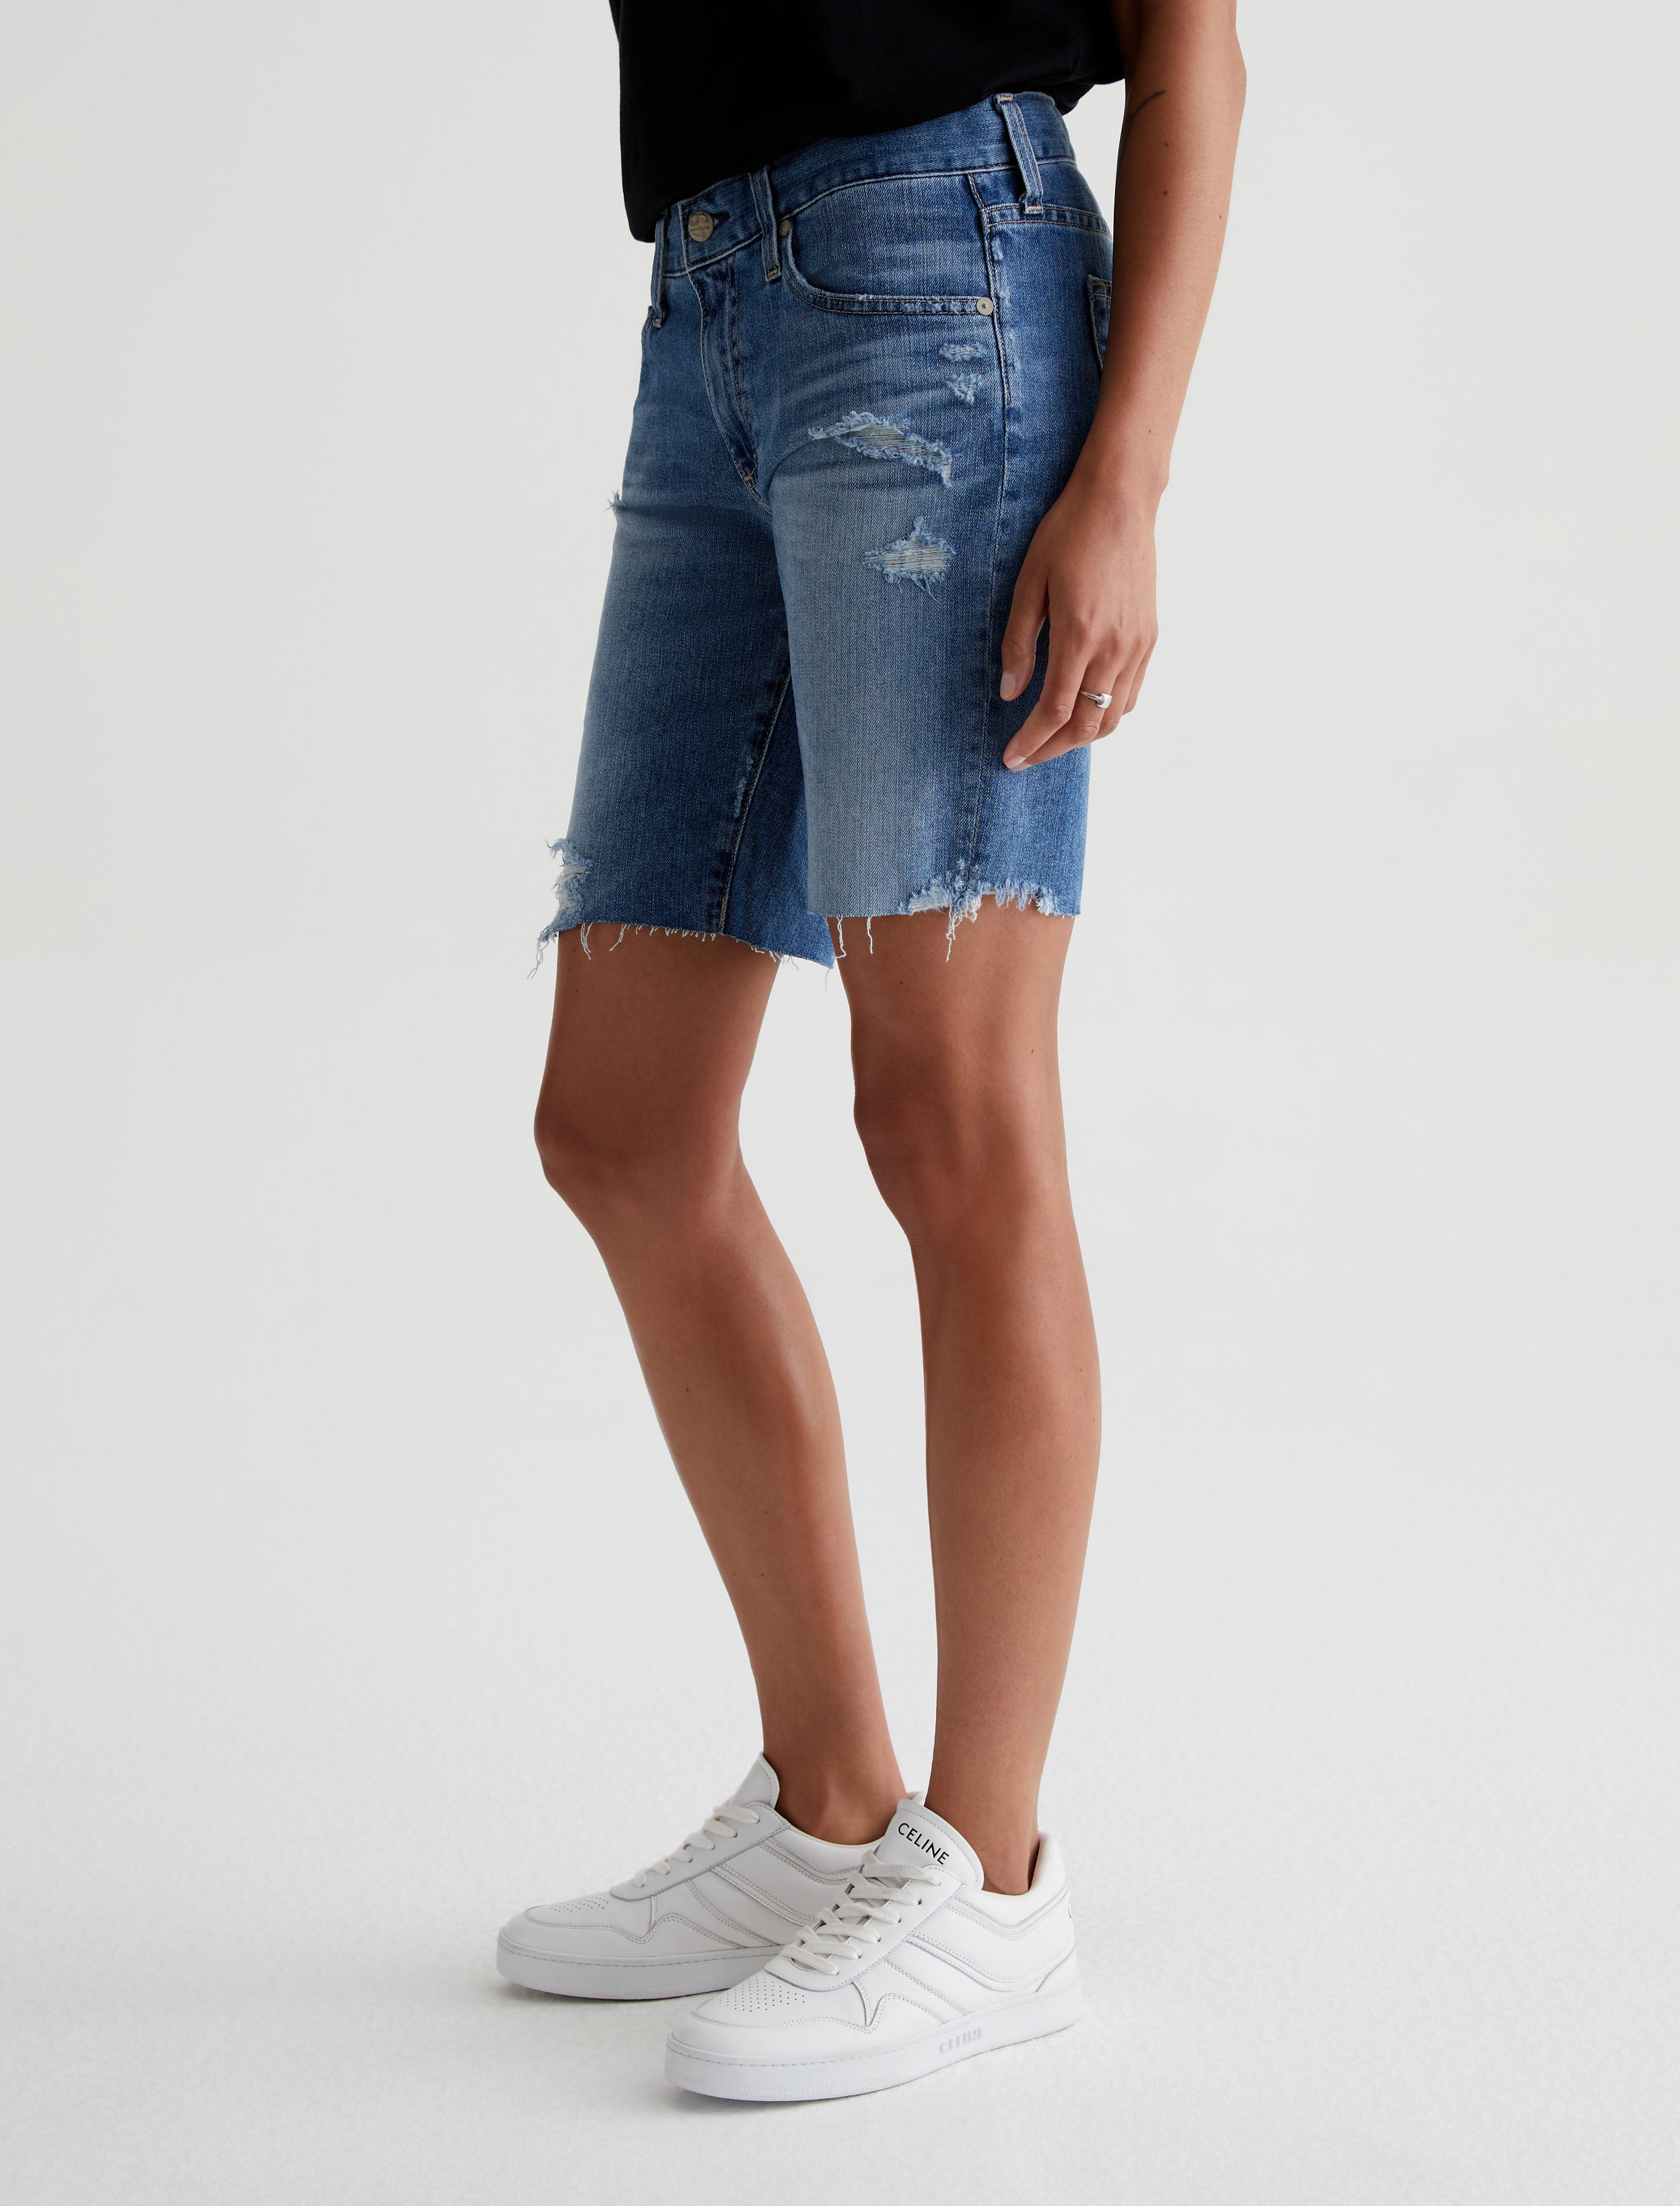 Women Summer Ripped Denim Jeans Shorts Stretchy Skinny Casual Beach Hot  Pants | eBay